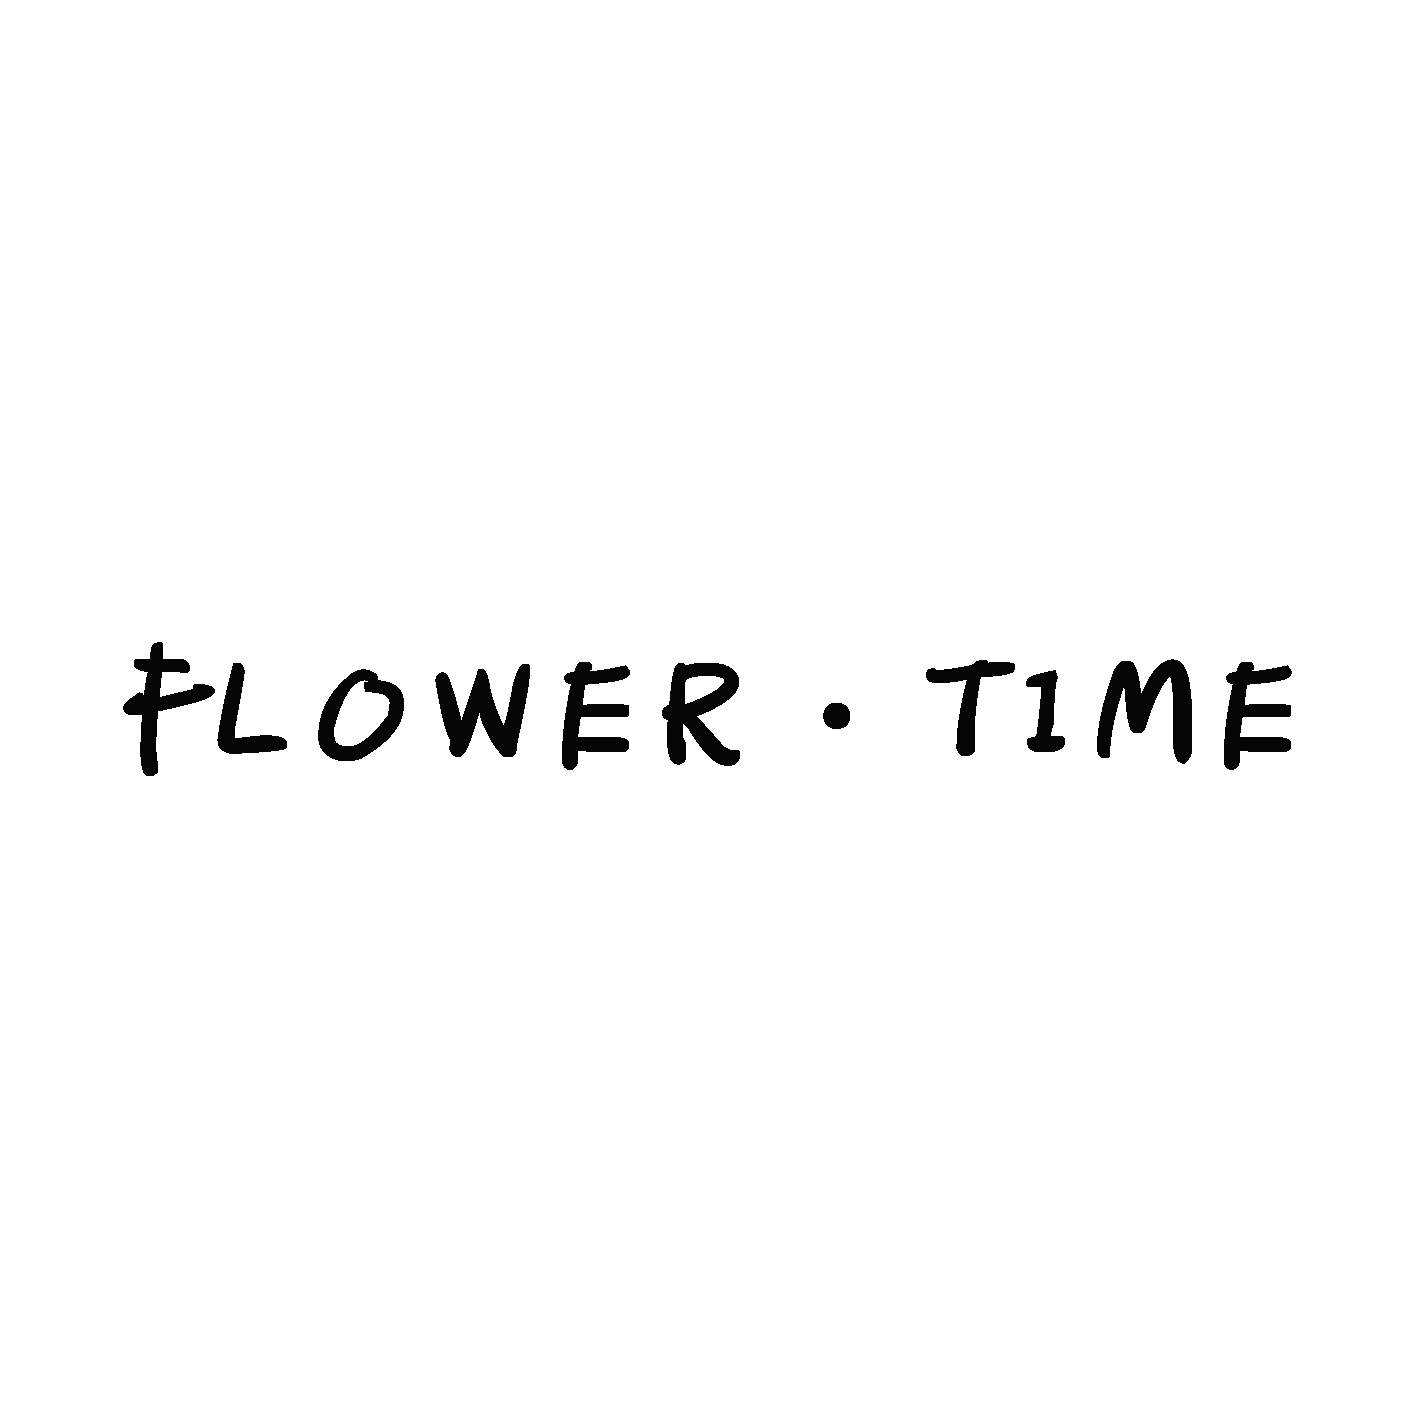 FLOWER·TIME